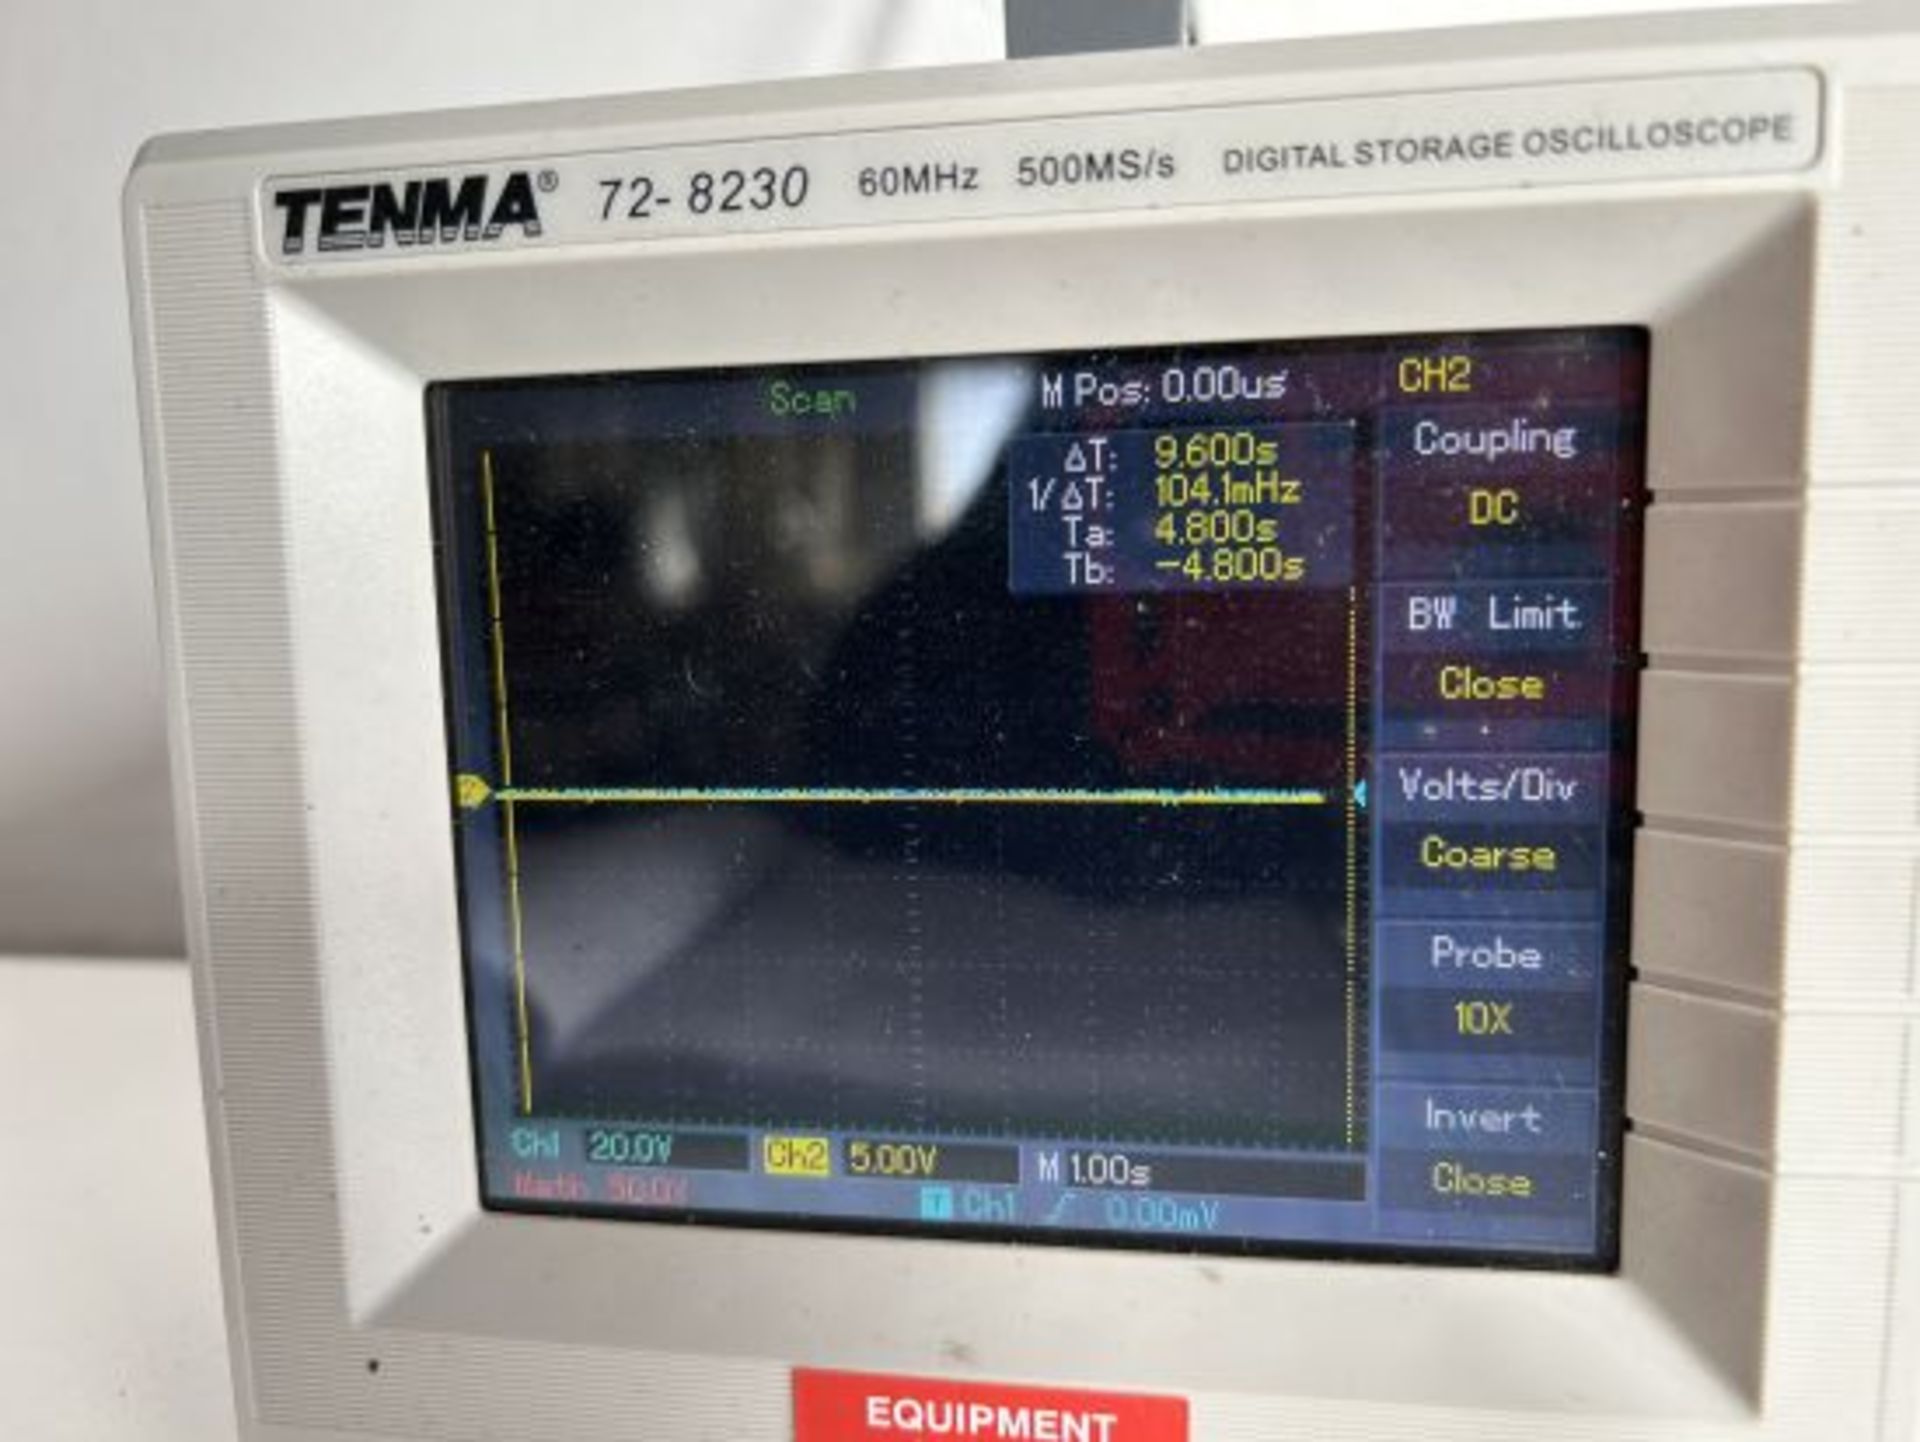 Tenma 72-8230 Digital Storage Oscilloscope, 60MHZ, 500MS/s. - Image 3 of 3